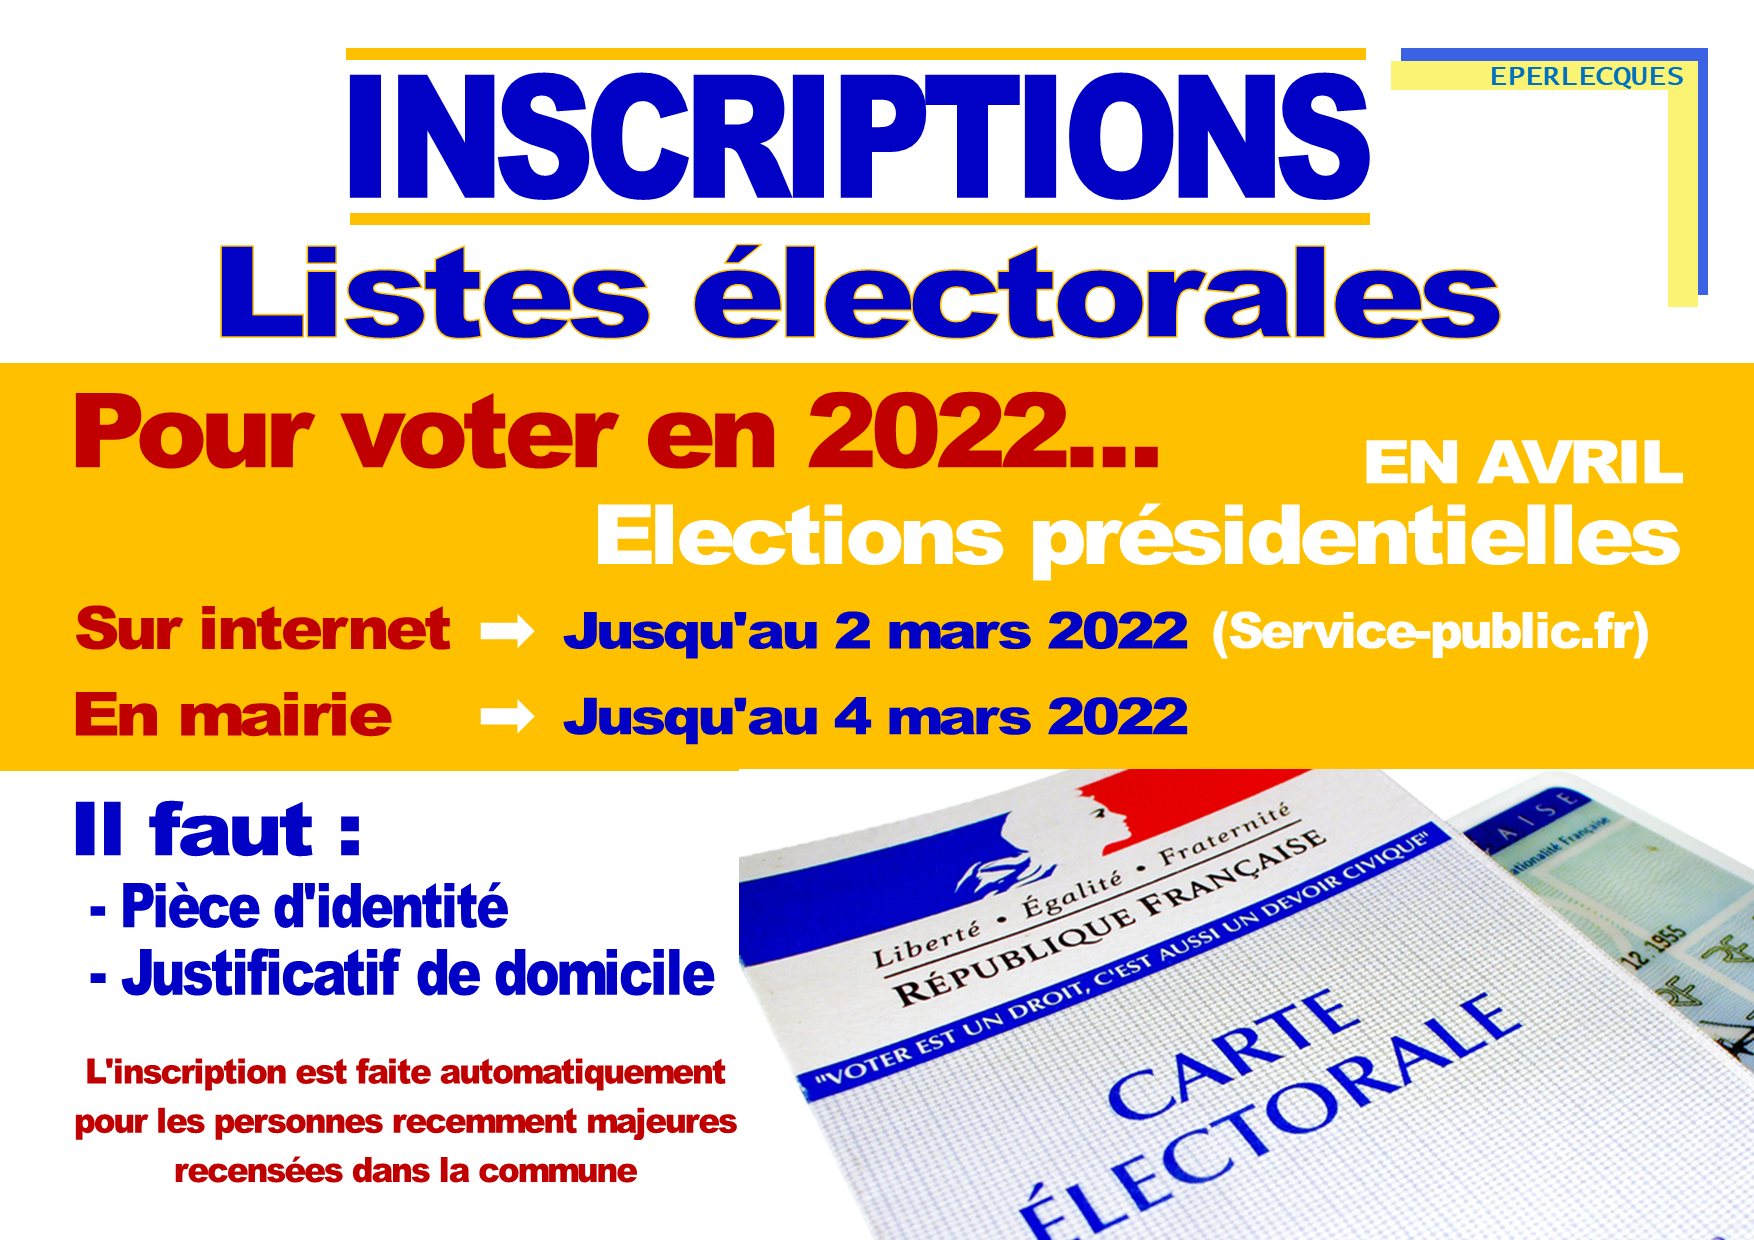 Inscriptions liste electorales